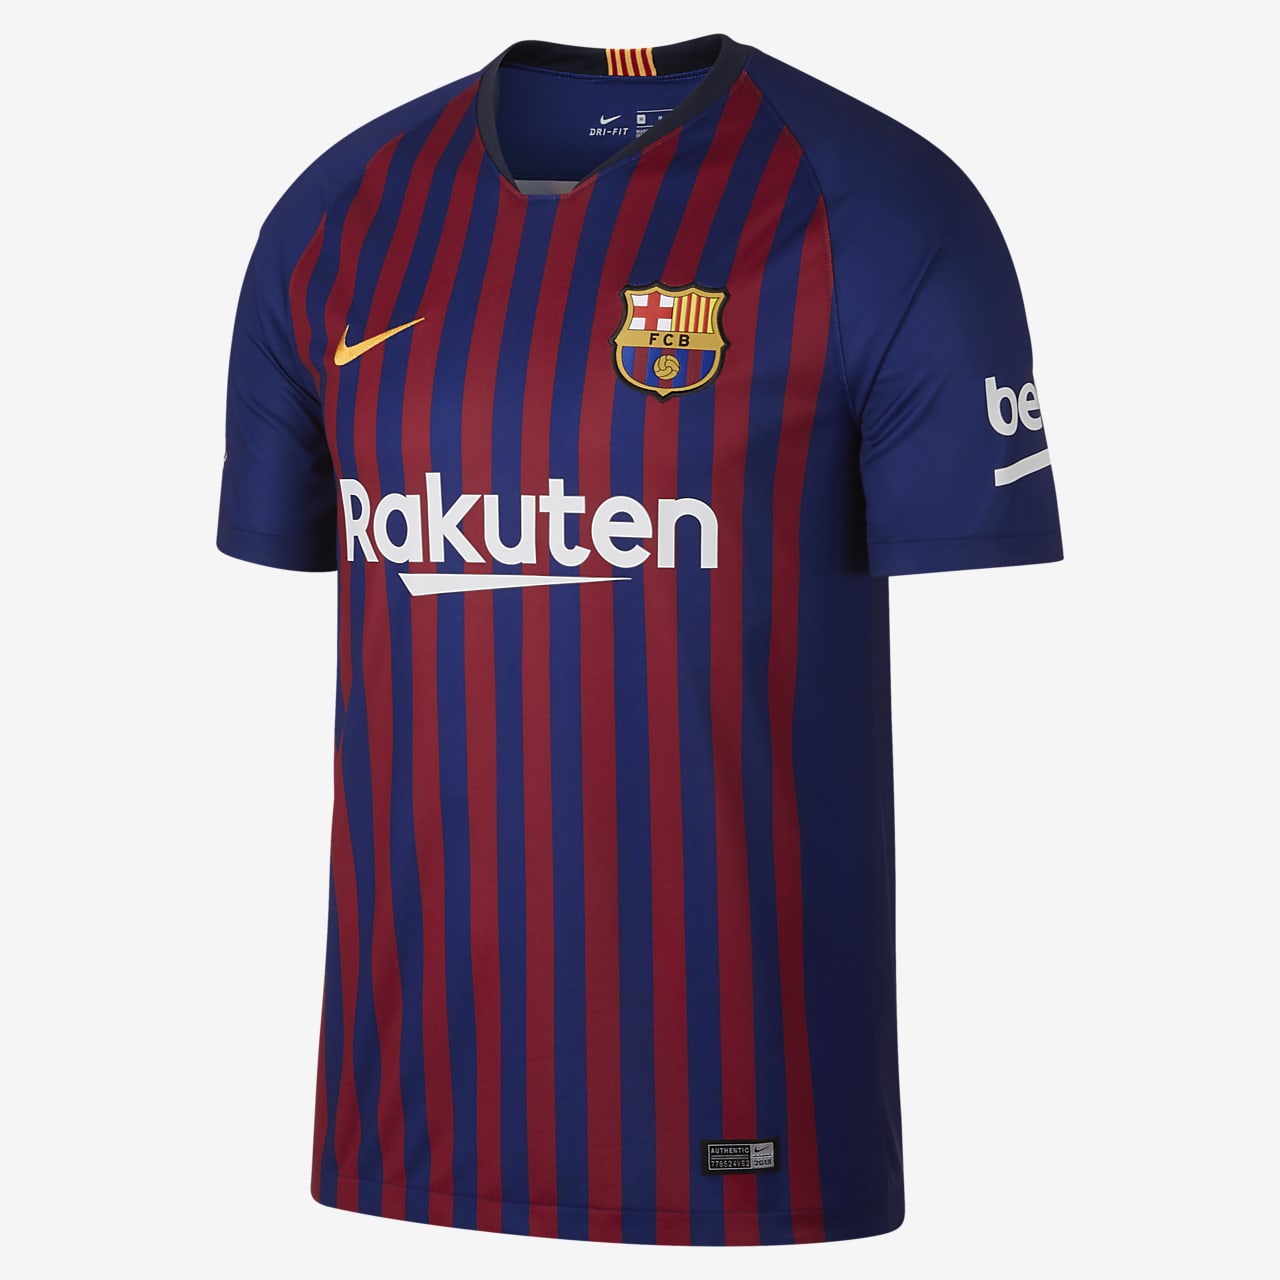 2018 barcelona jersey